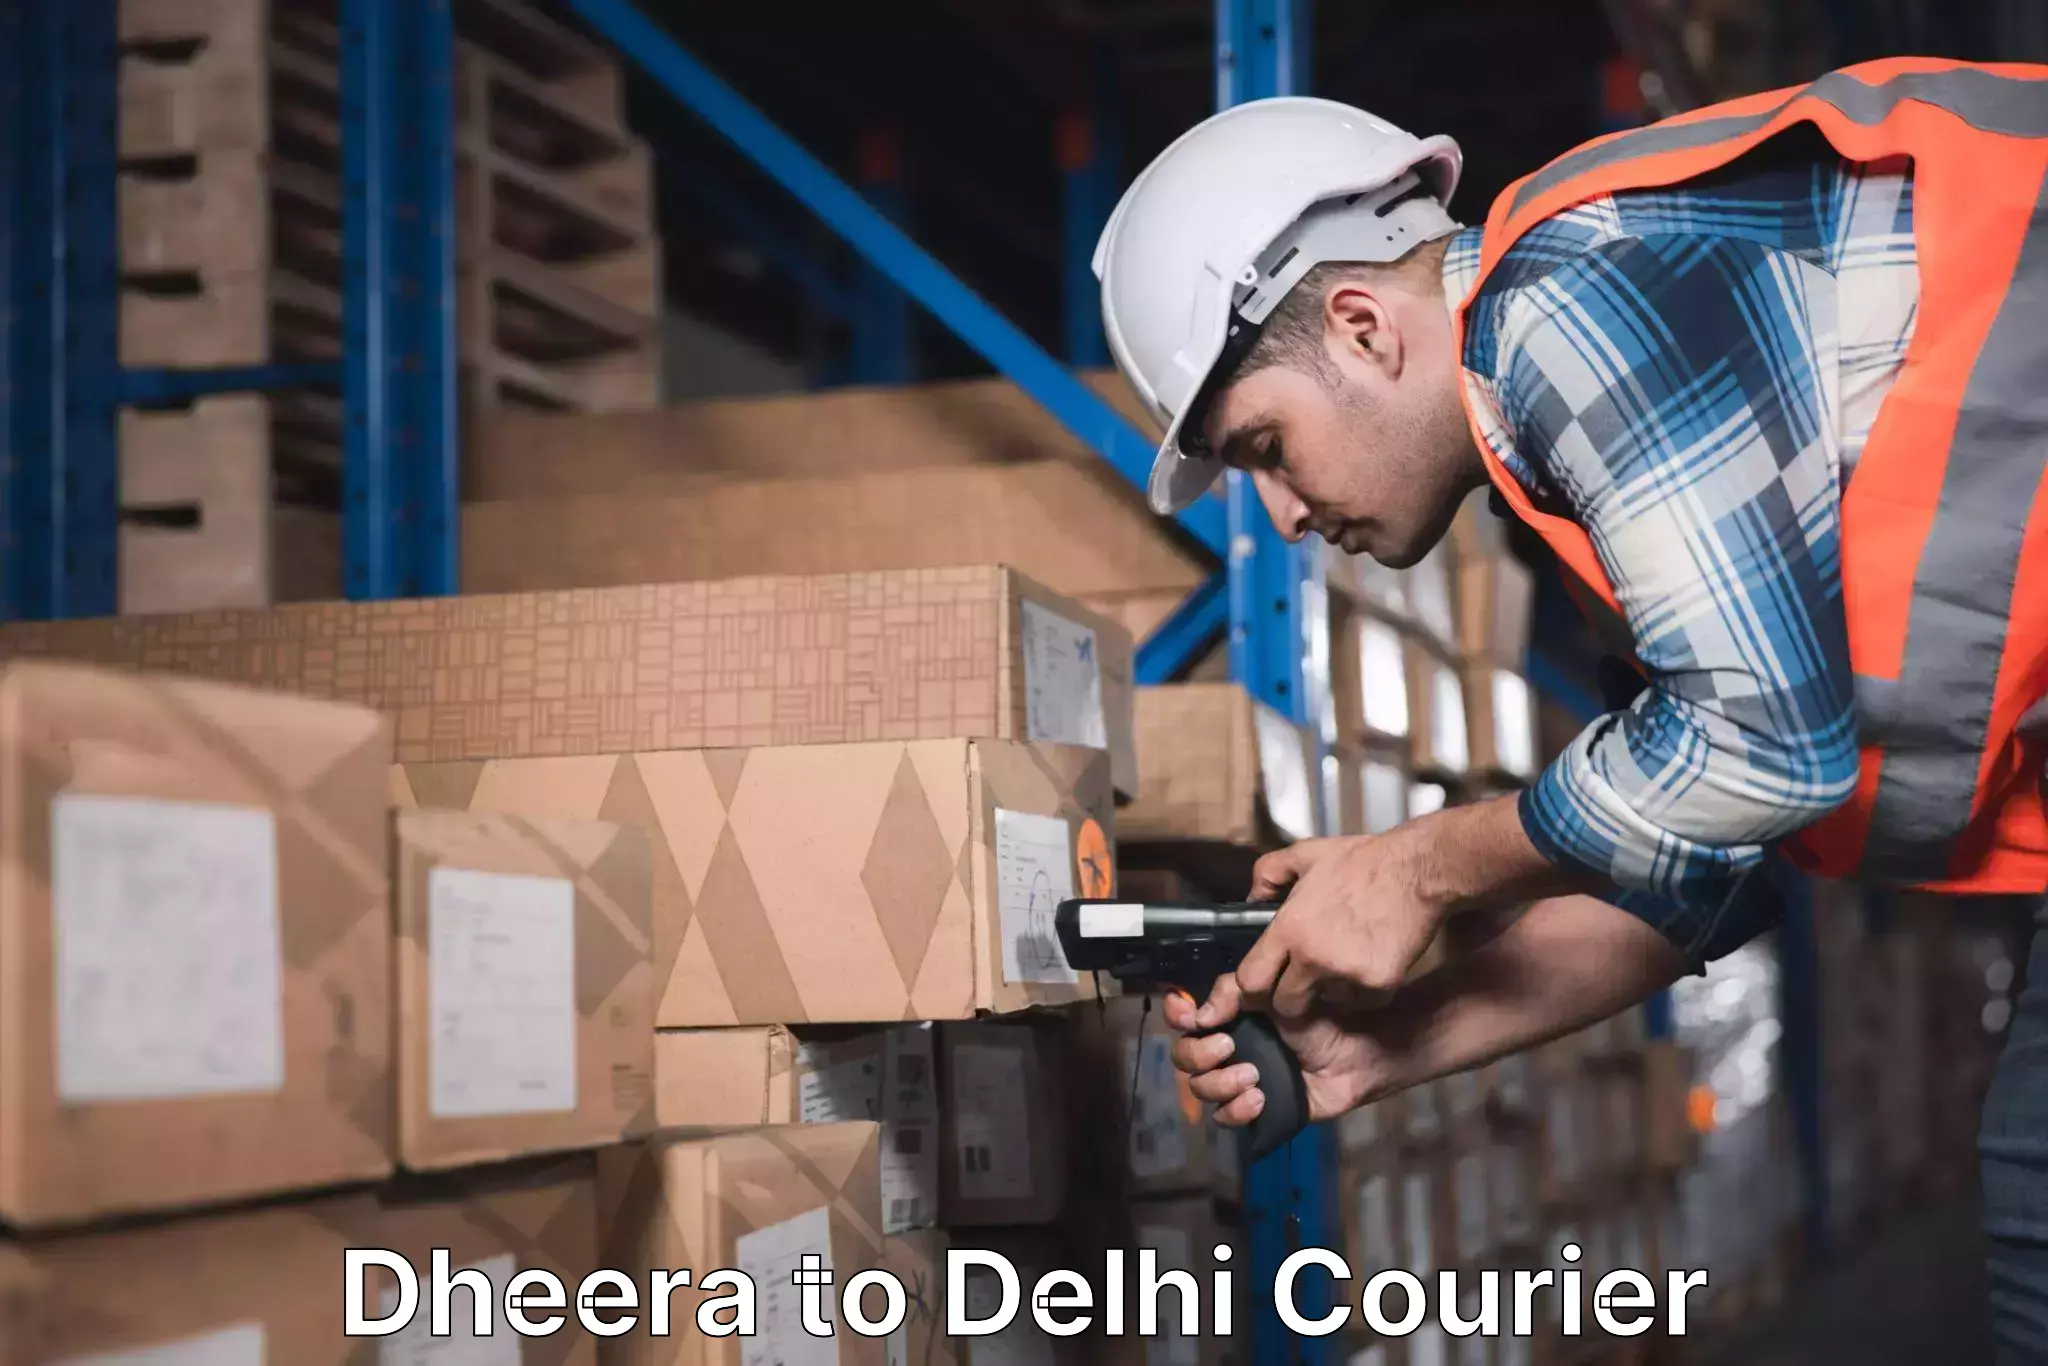 Digital courier platforms Dheera to Delhi